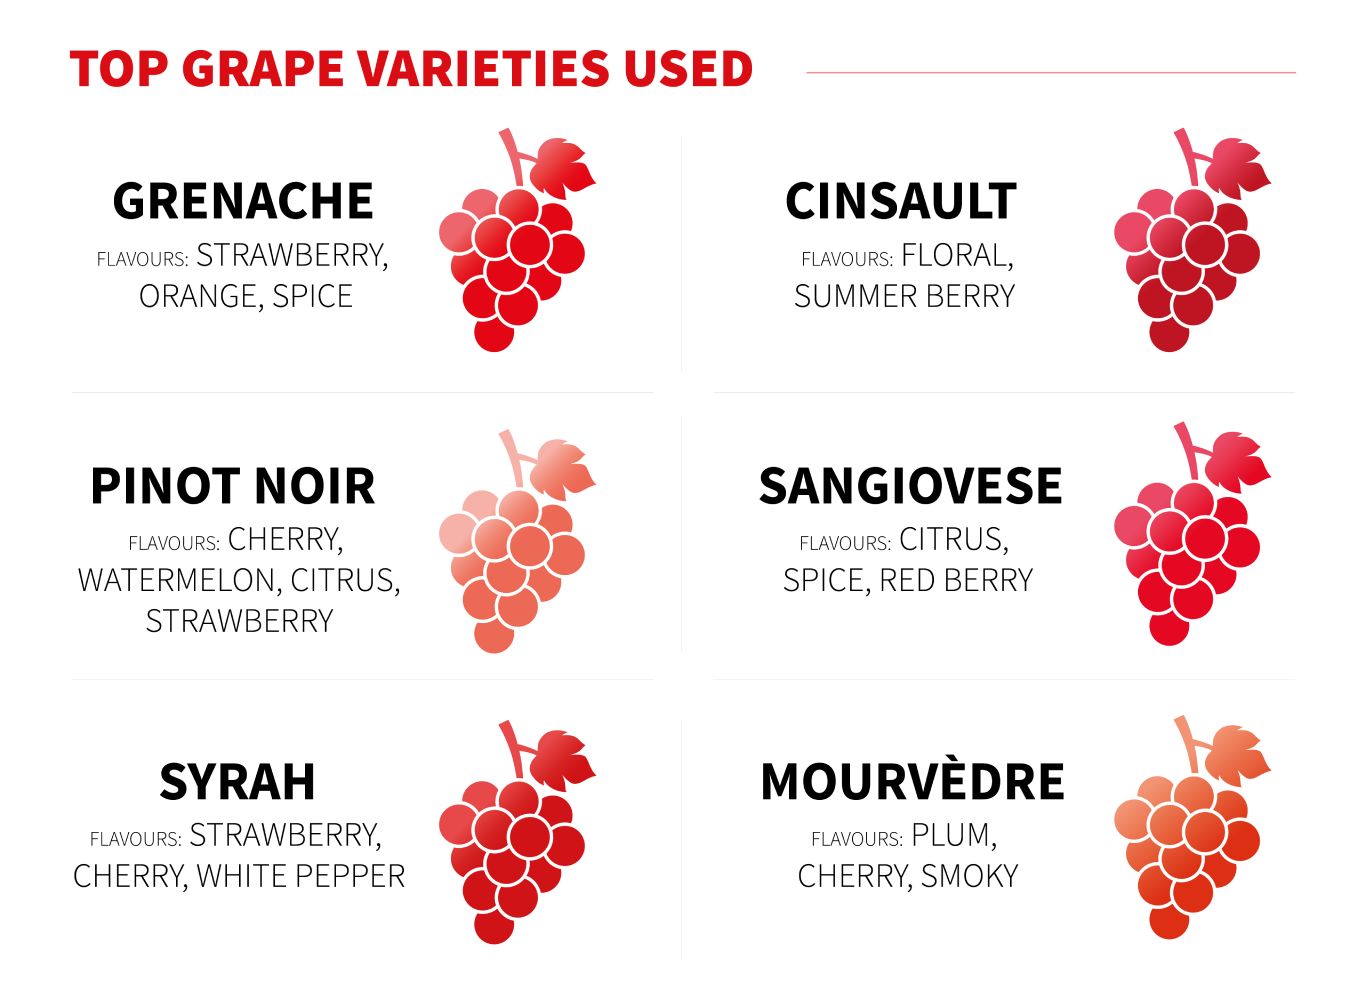 Grape Types Chart